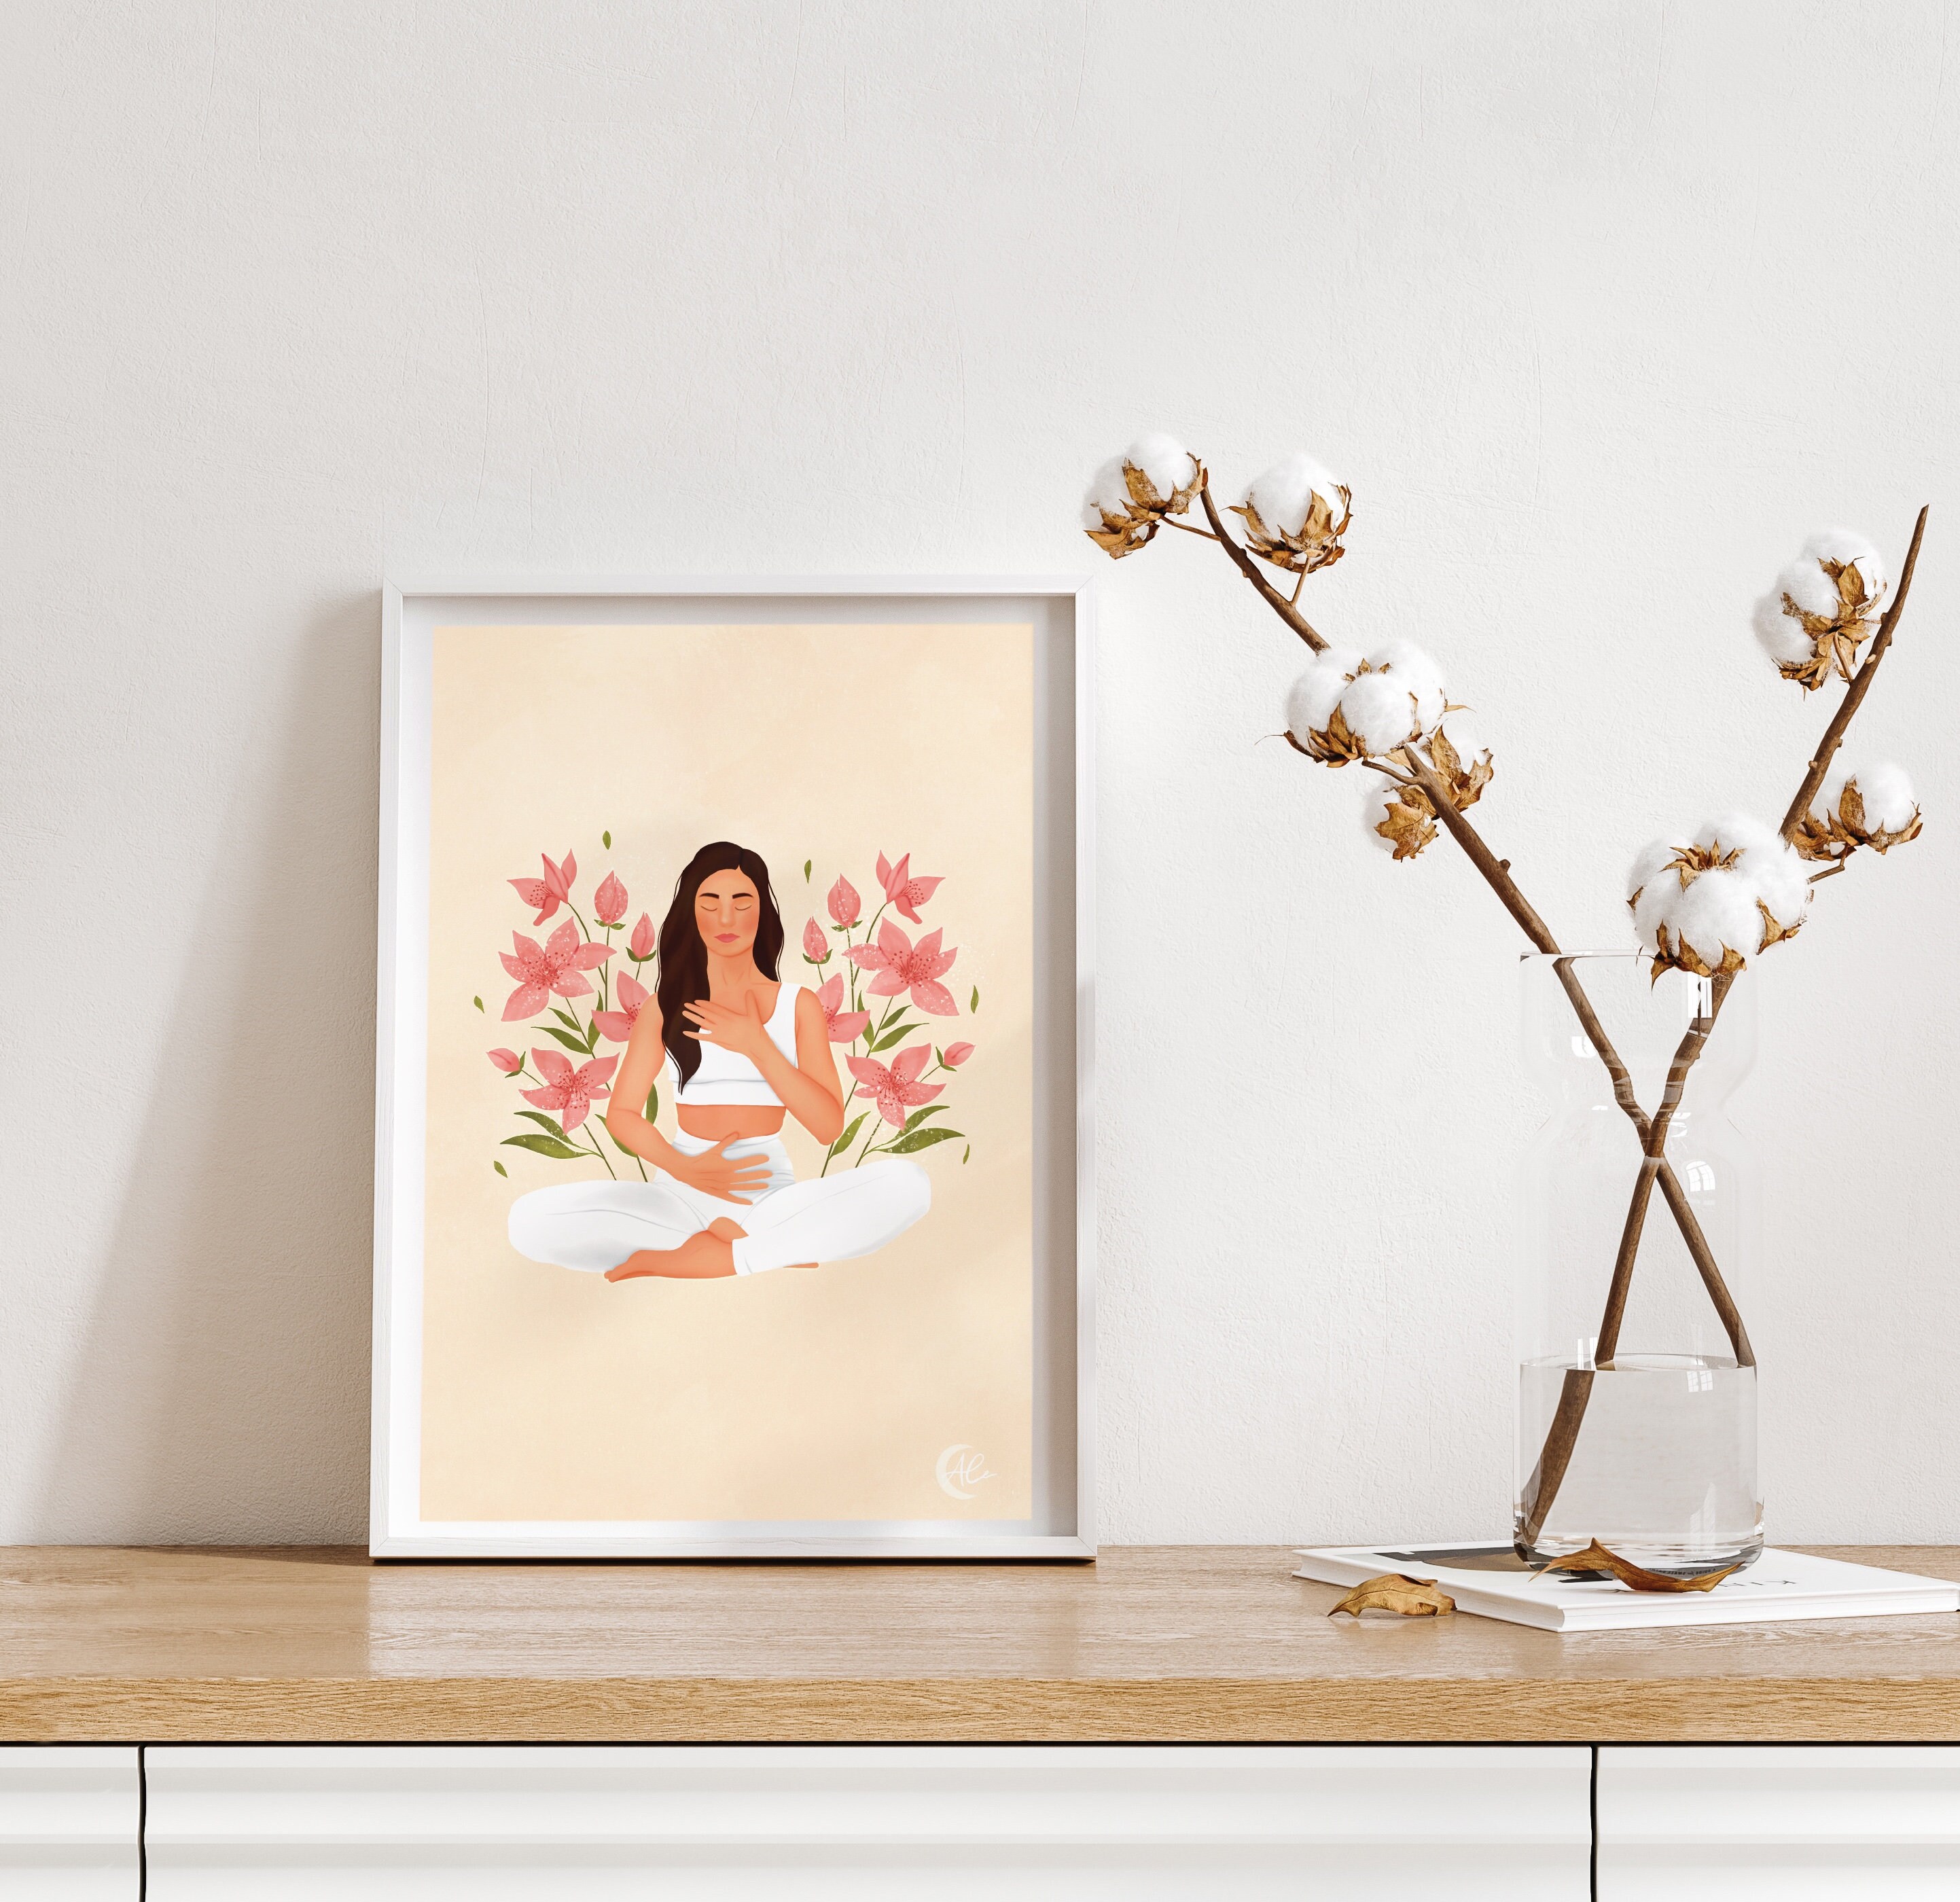 Scorpion Yoga Pose / Minimal Yoga Print /meditation Poster / Relaxation Art  / Gift for Yoga Lovers 